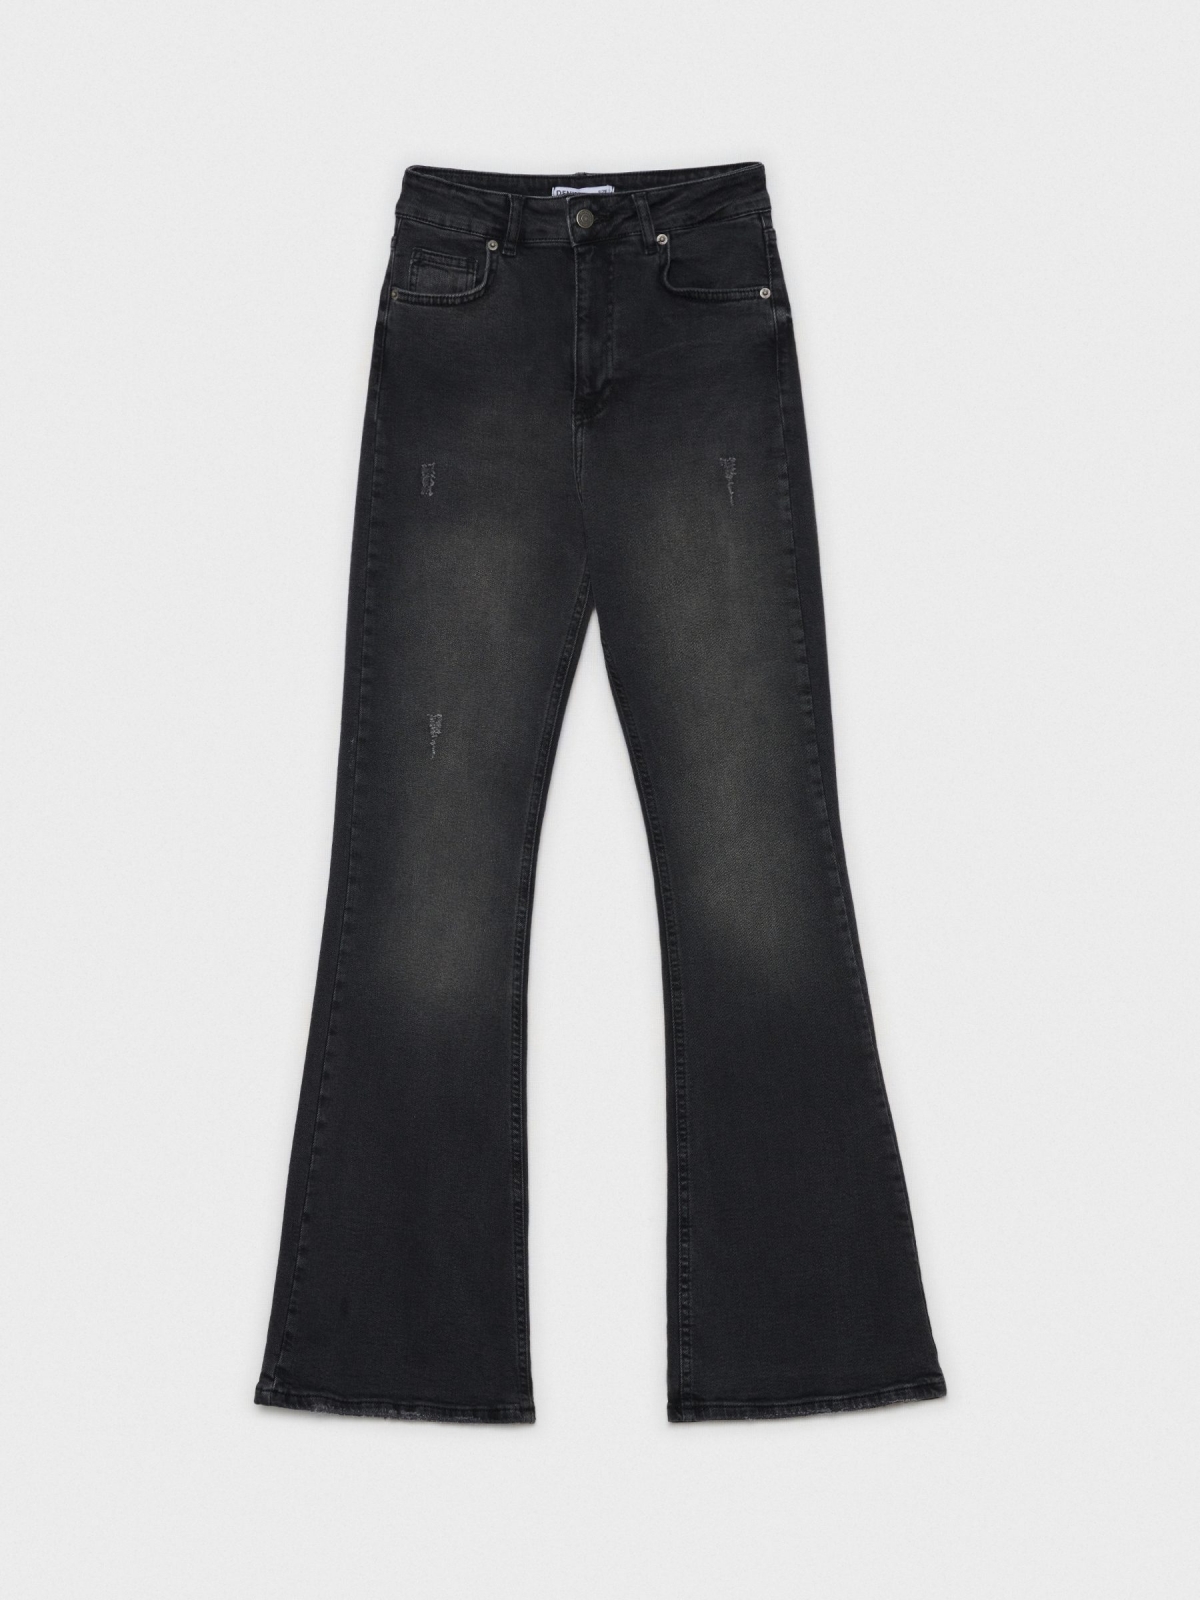  High waist black flared jeans black